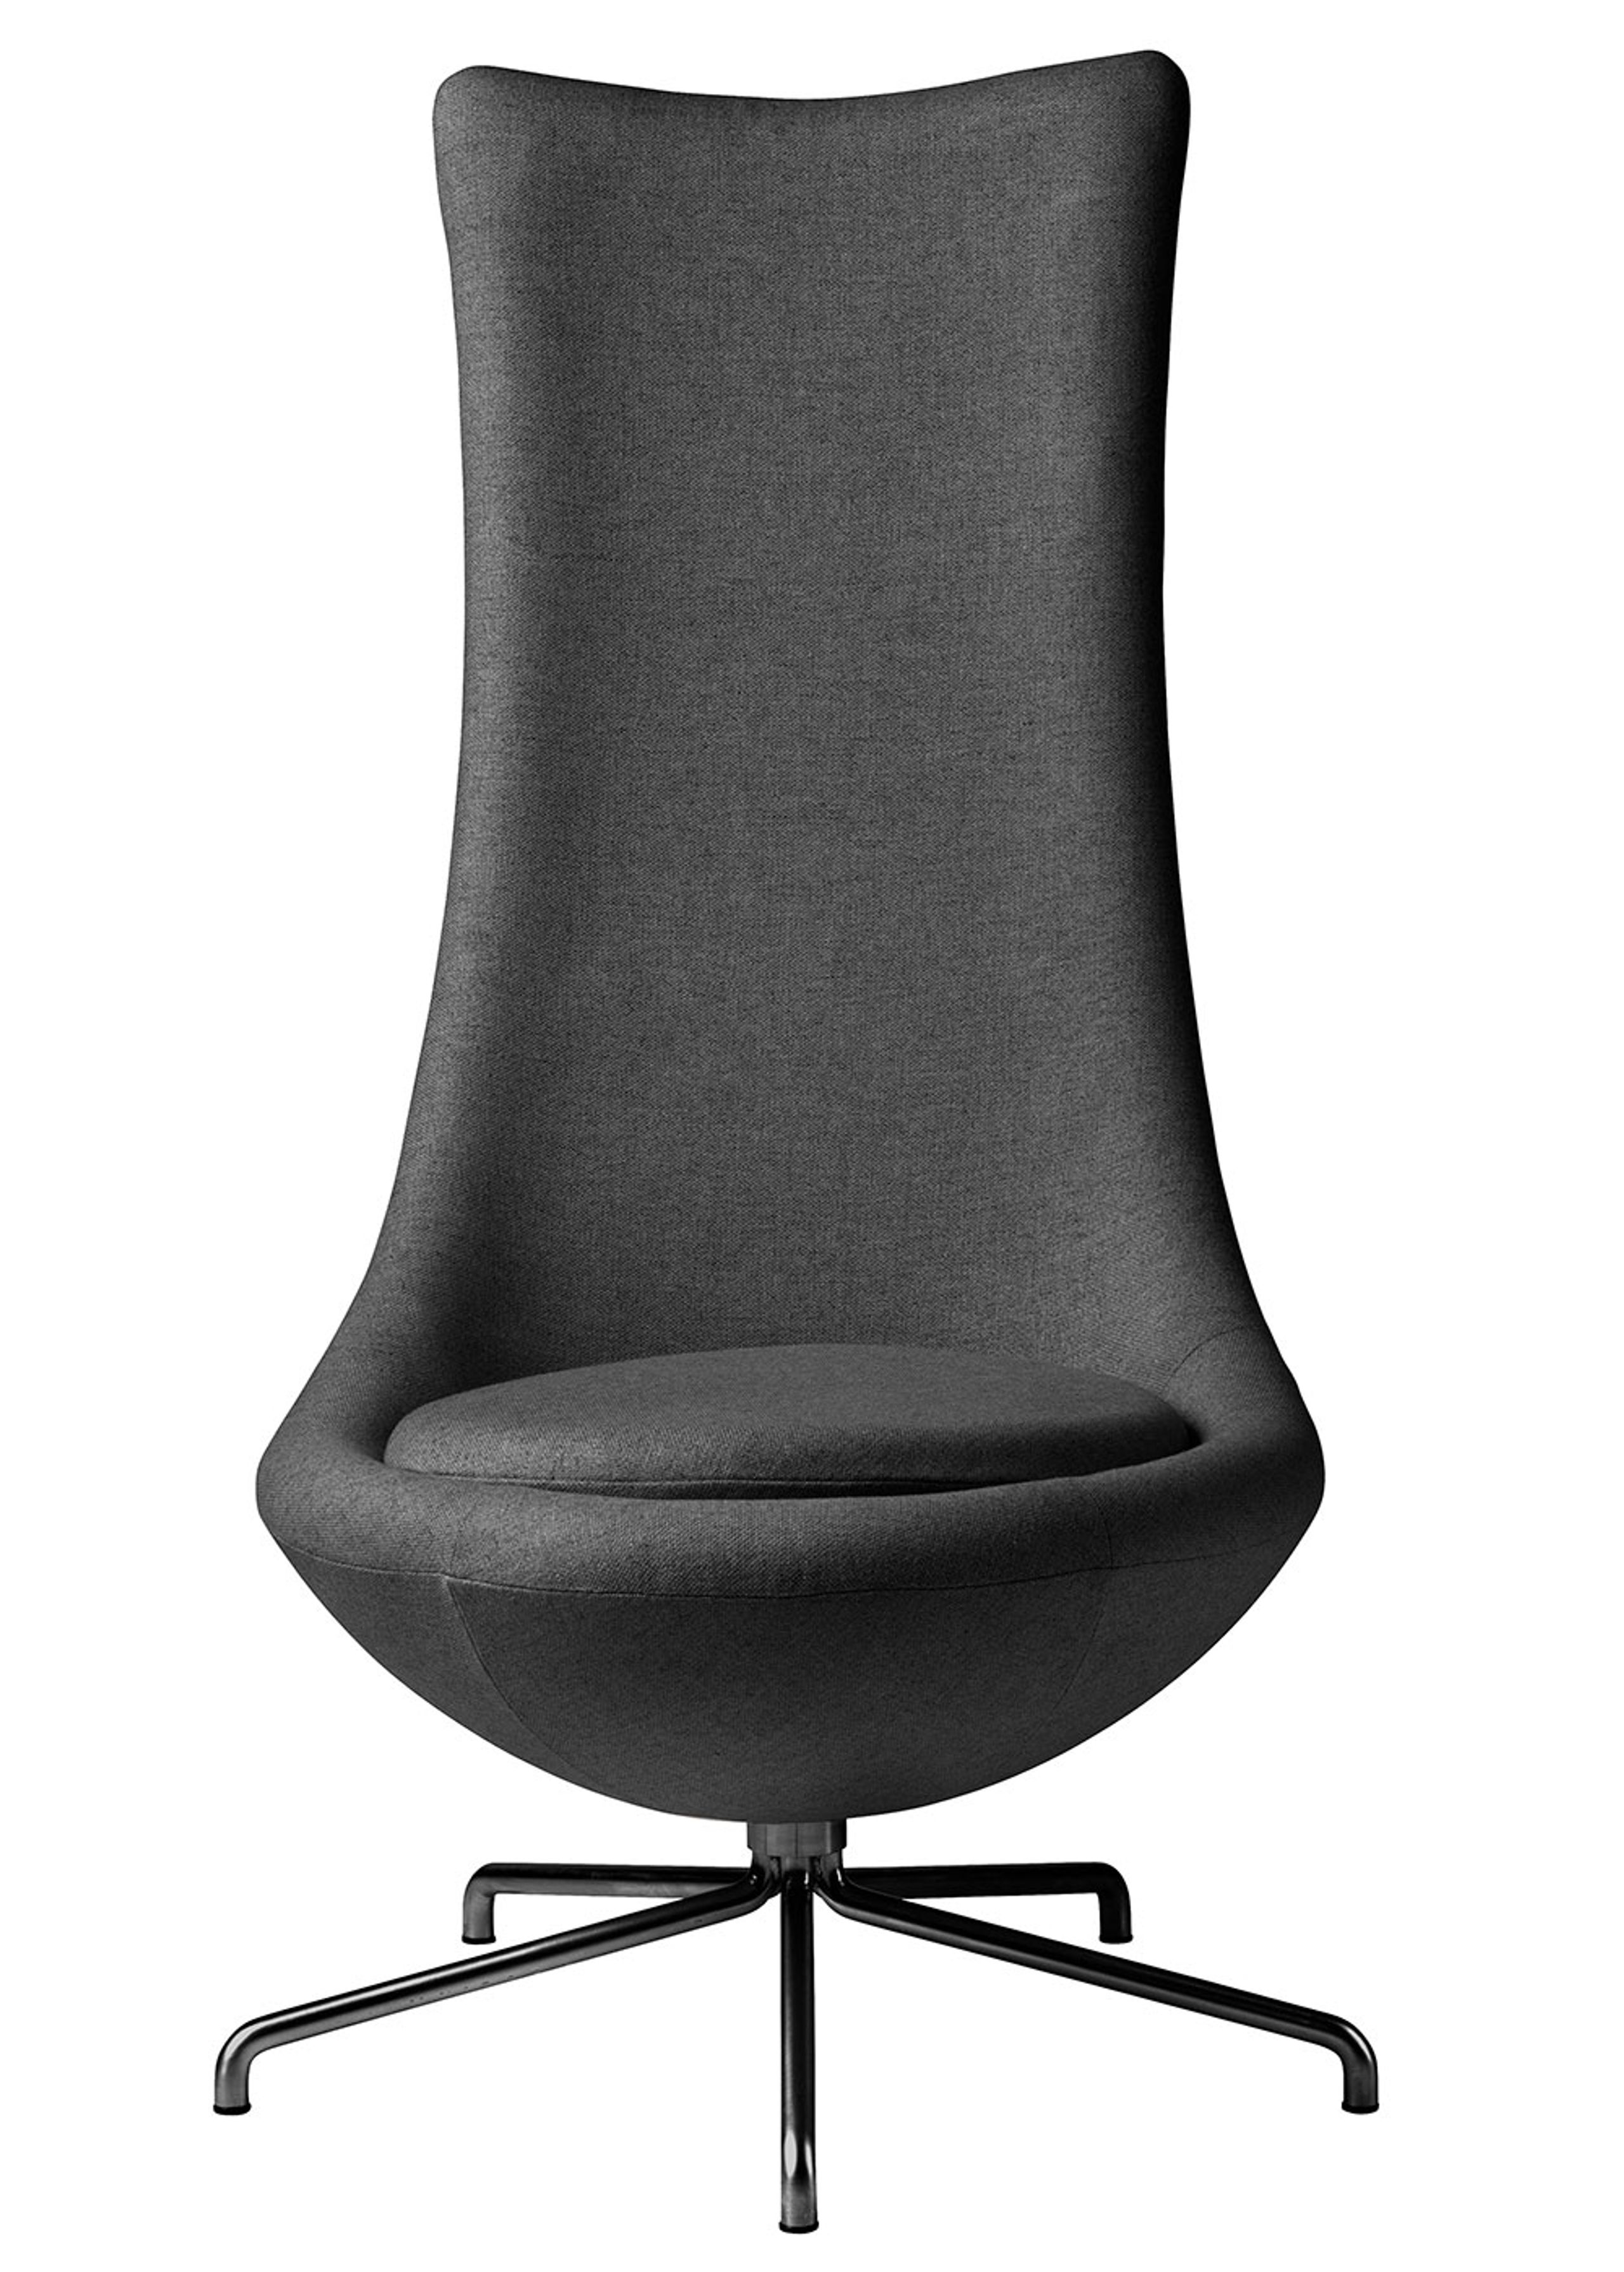 FDB Møbler / Furniture - Lounge chair - L41 Bellamie - Loungestol, High back - Mørkegrå (Camira), MLF28 / Metal